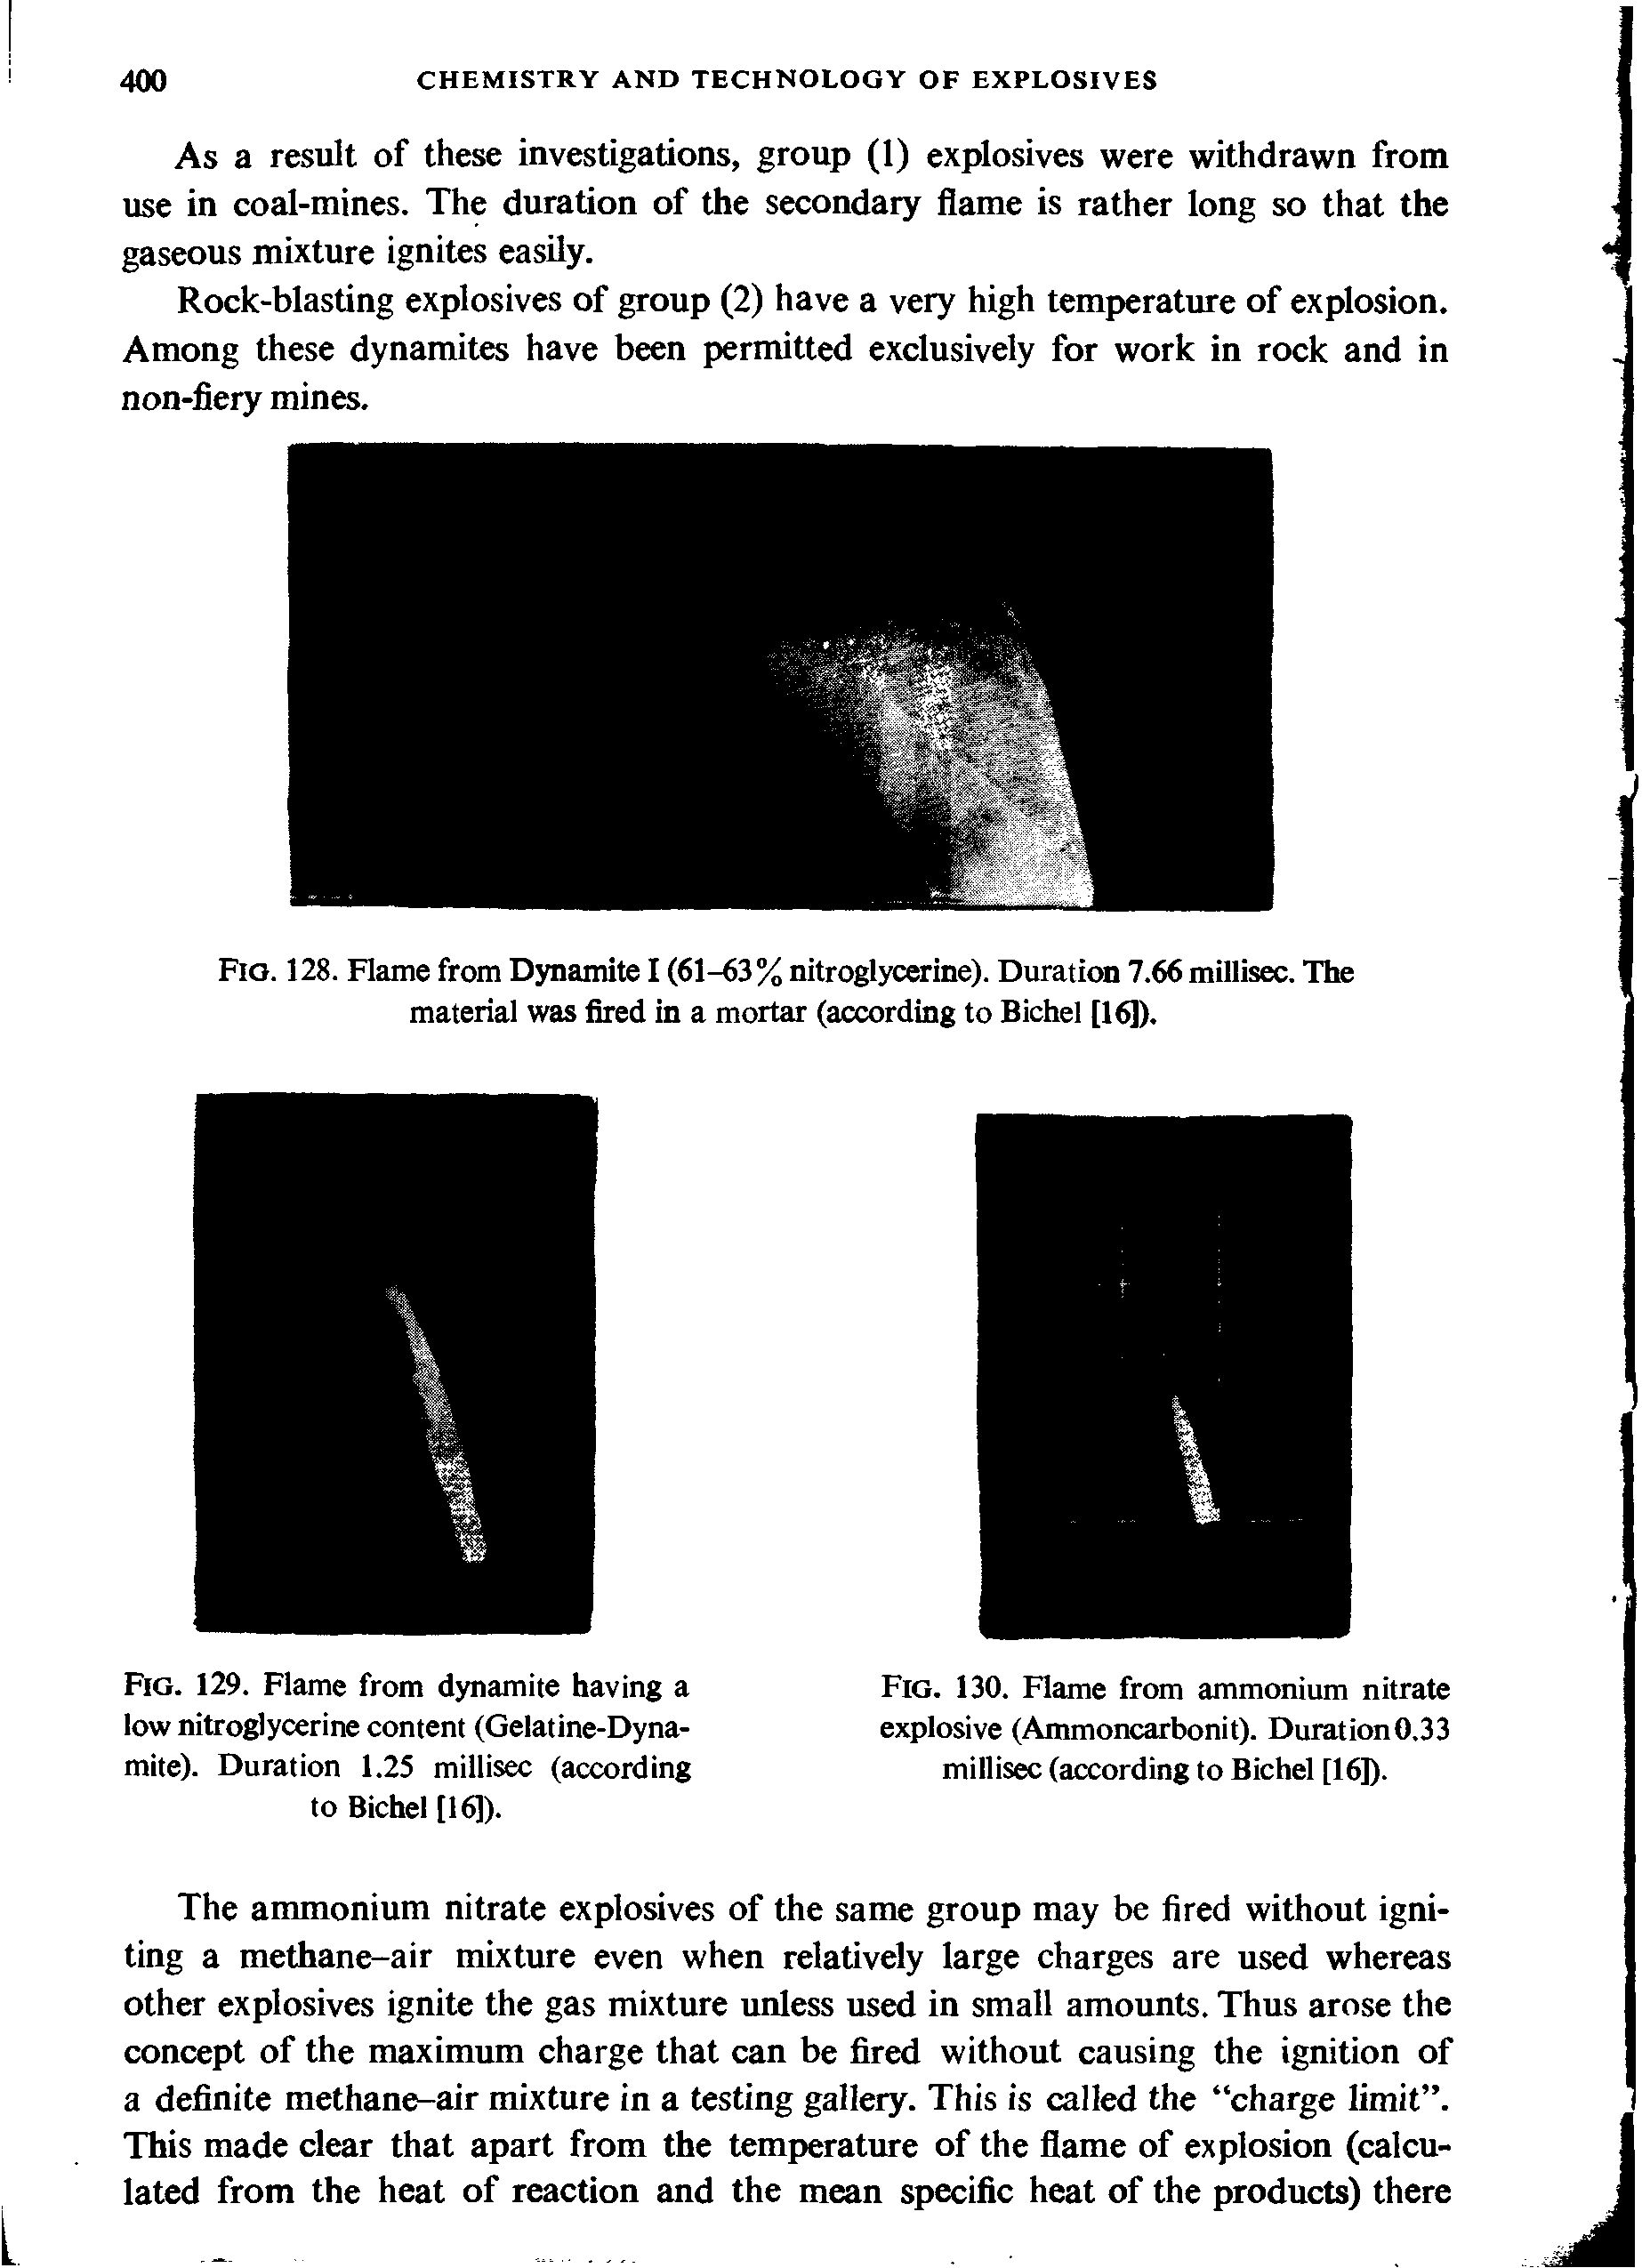 Fig. 129. Flame from dynamite having a low nitroglycerine content (Gelatine-Dynamite). Duration 1.25 millisec (according to Bichel [16]).